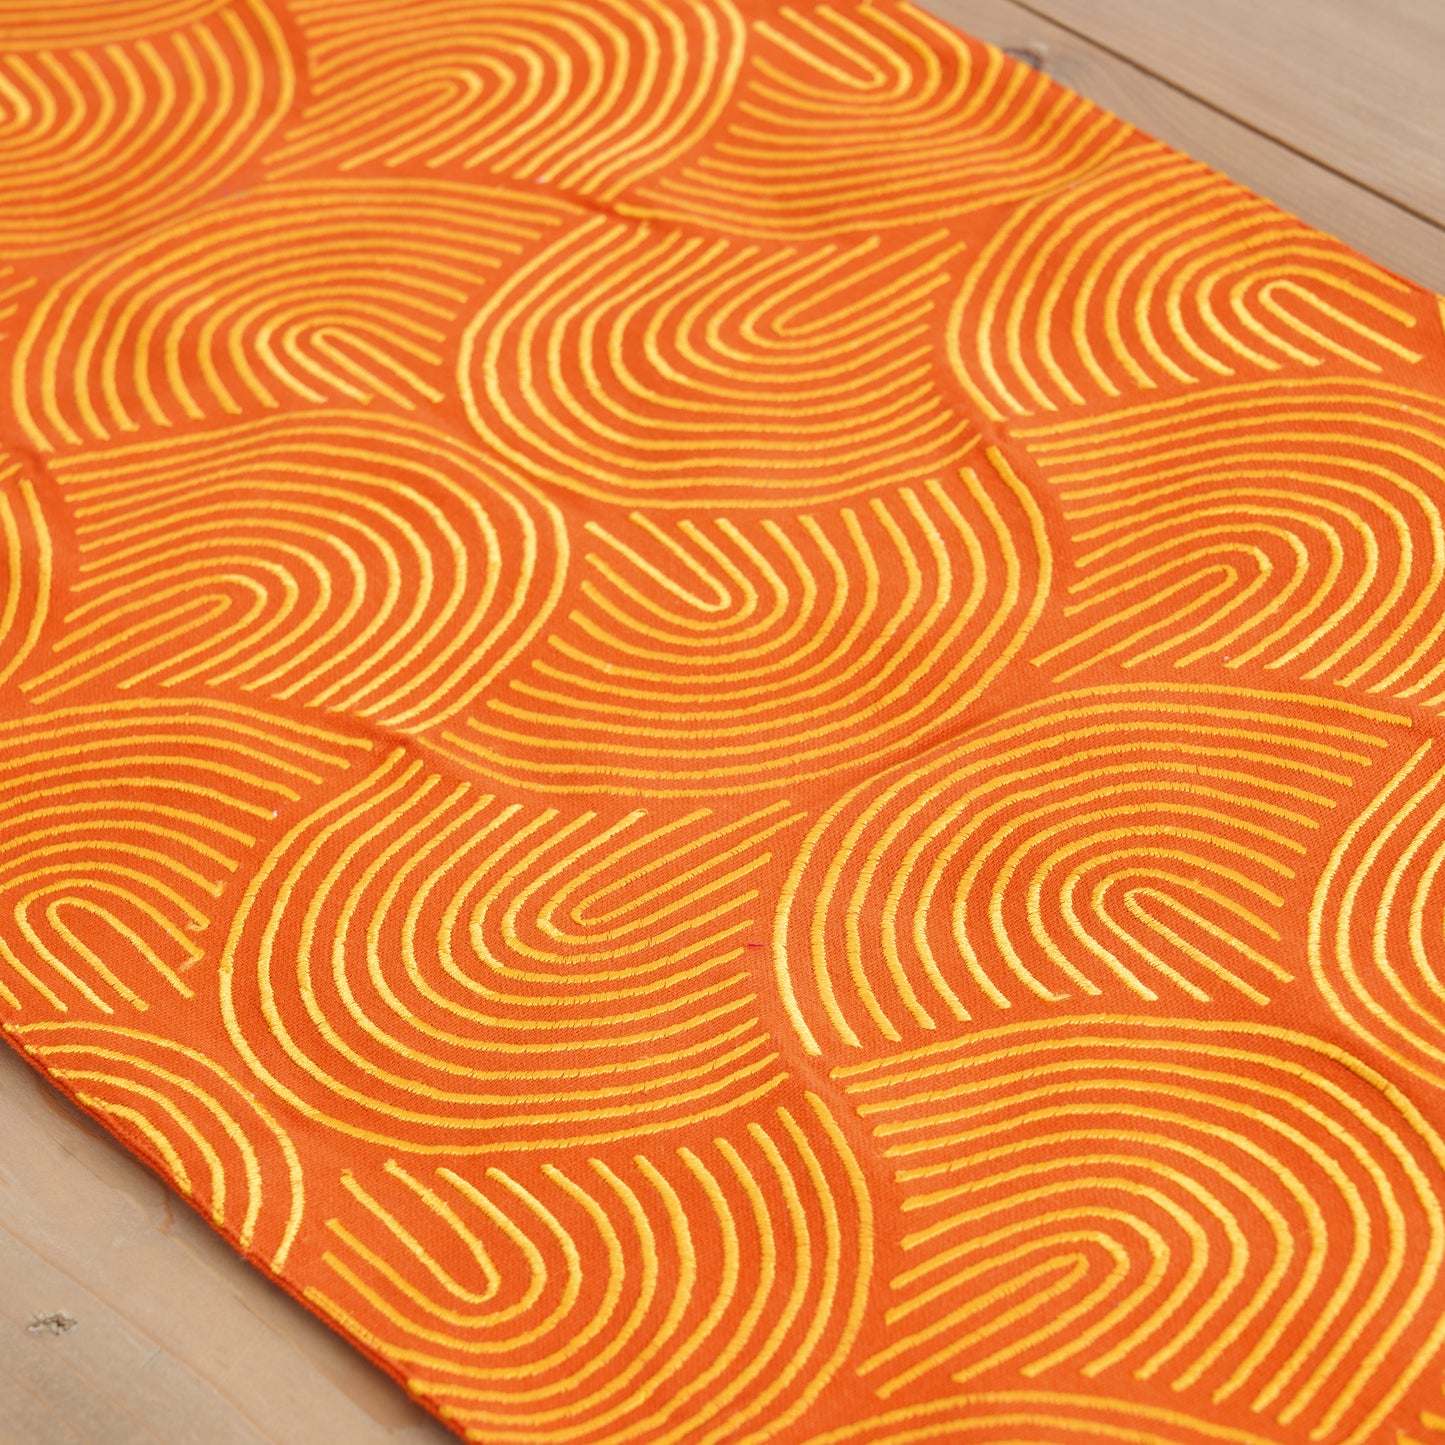 KASHIDAKAARI - Tangerine runner with all over embroidery, modern retro, geometrical pattern